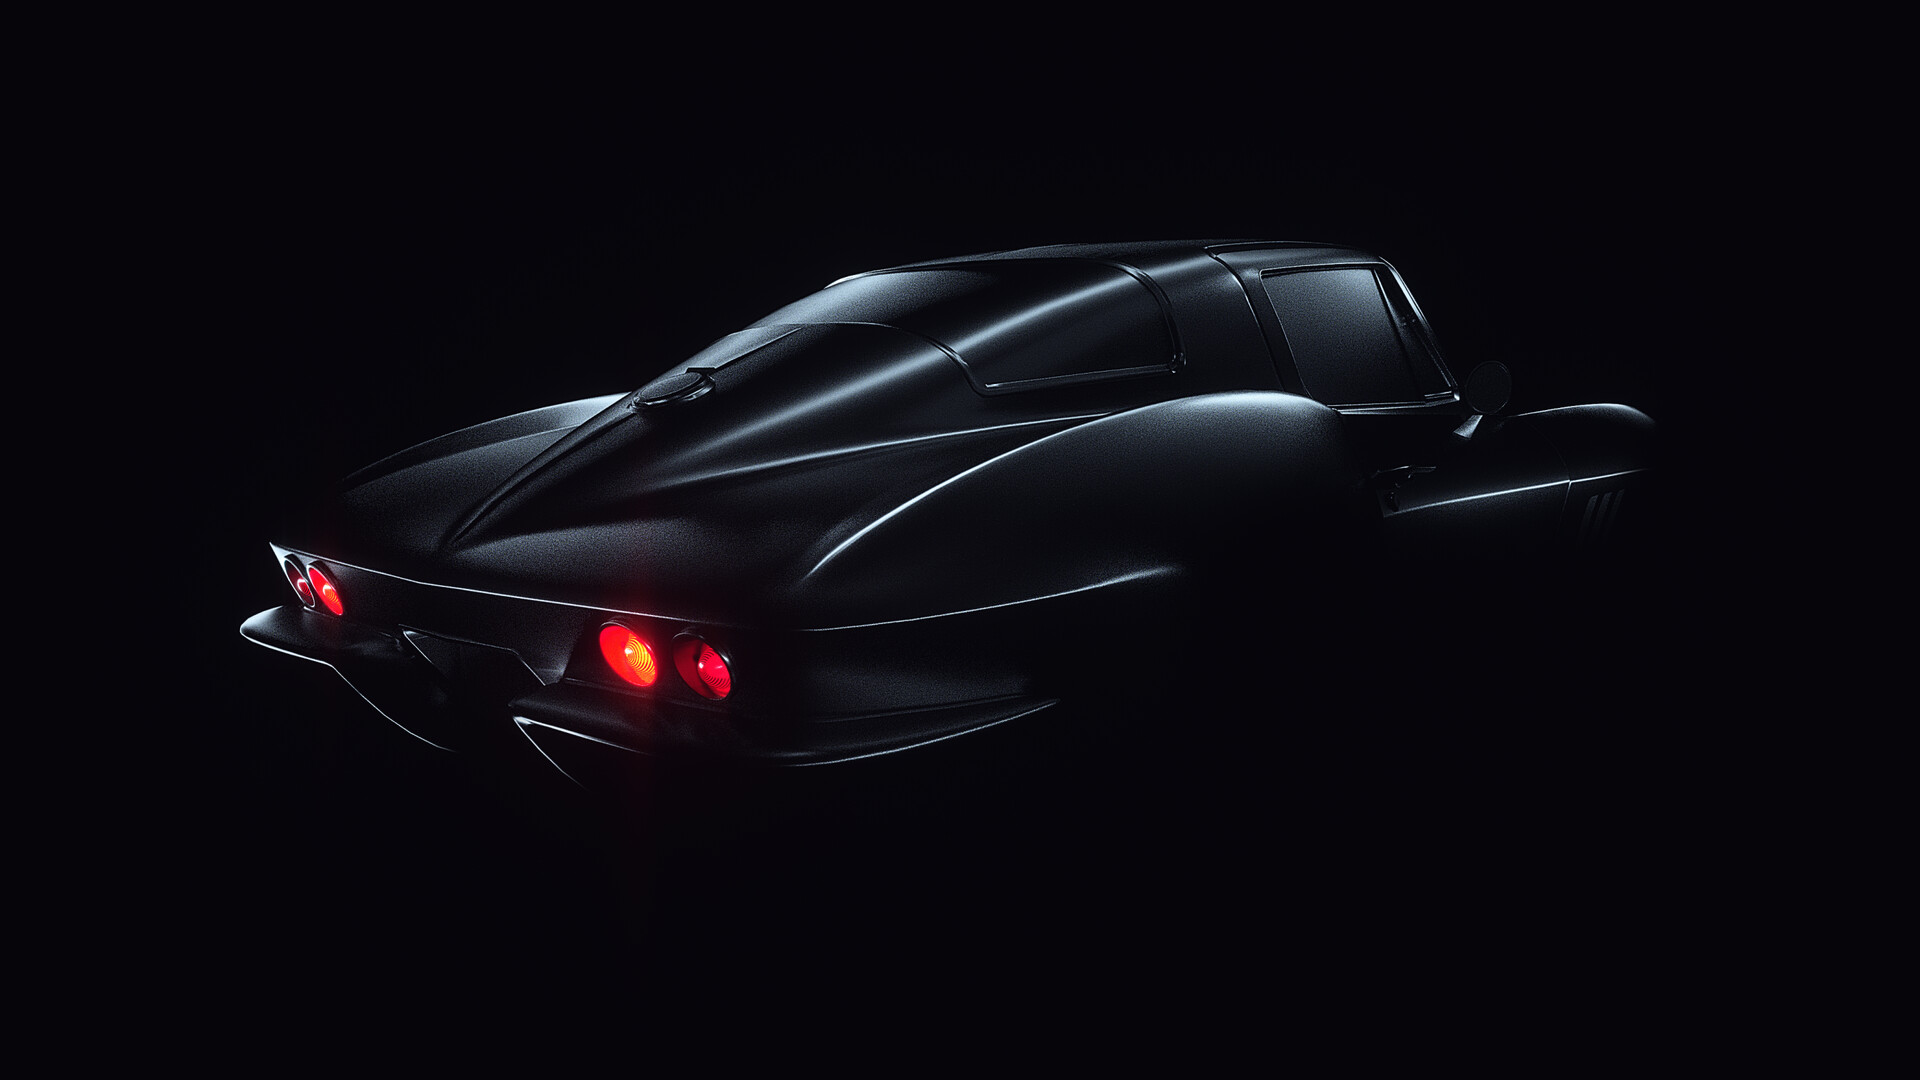 General 1920x1080 car black background lines digital art lights flashlight black shadow Corvette Chevrolet black cars vehicle